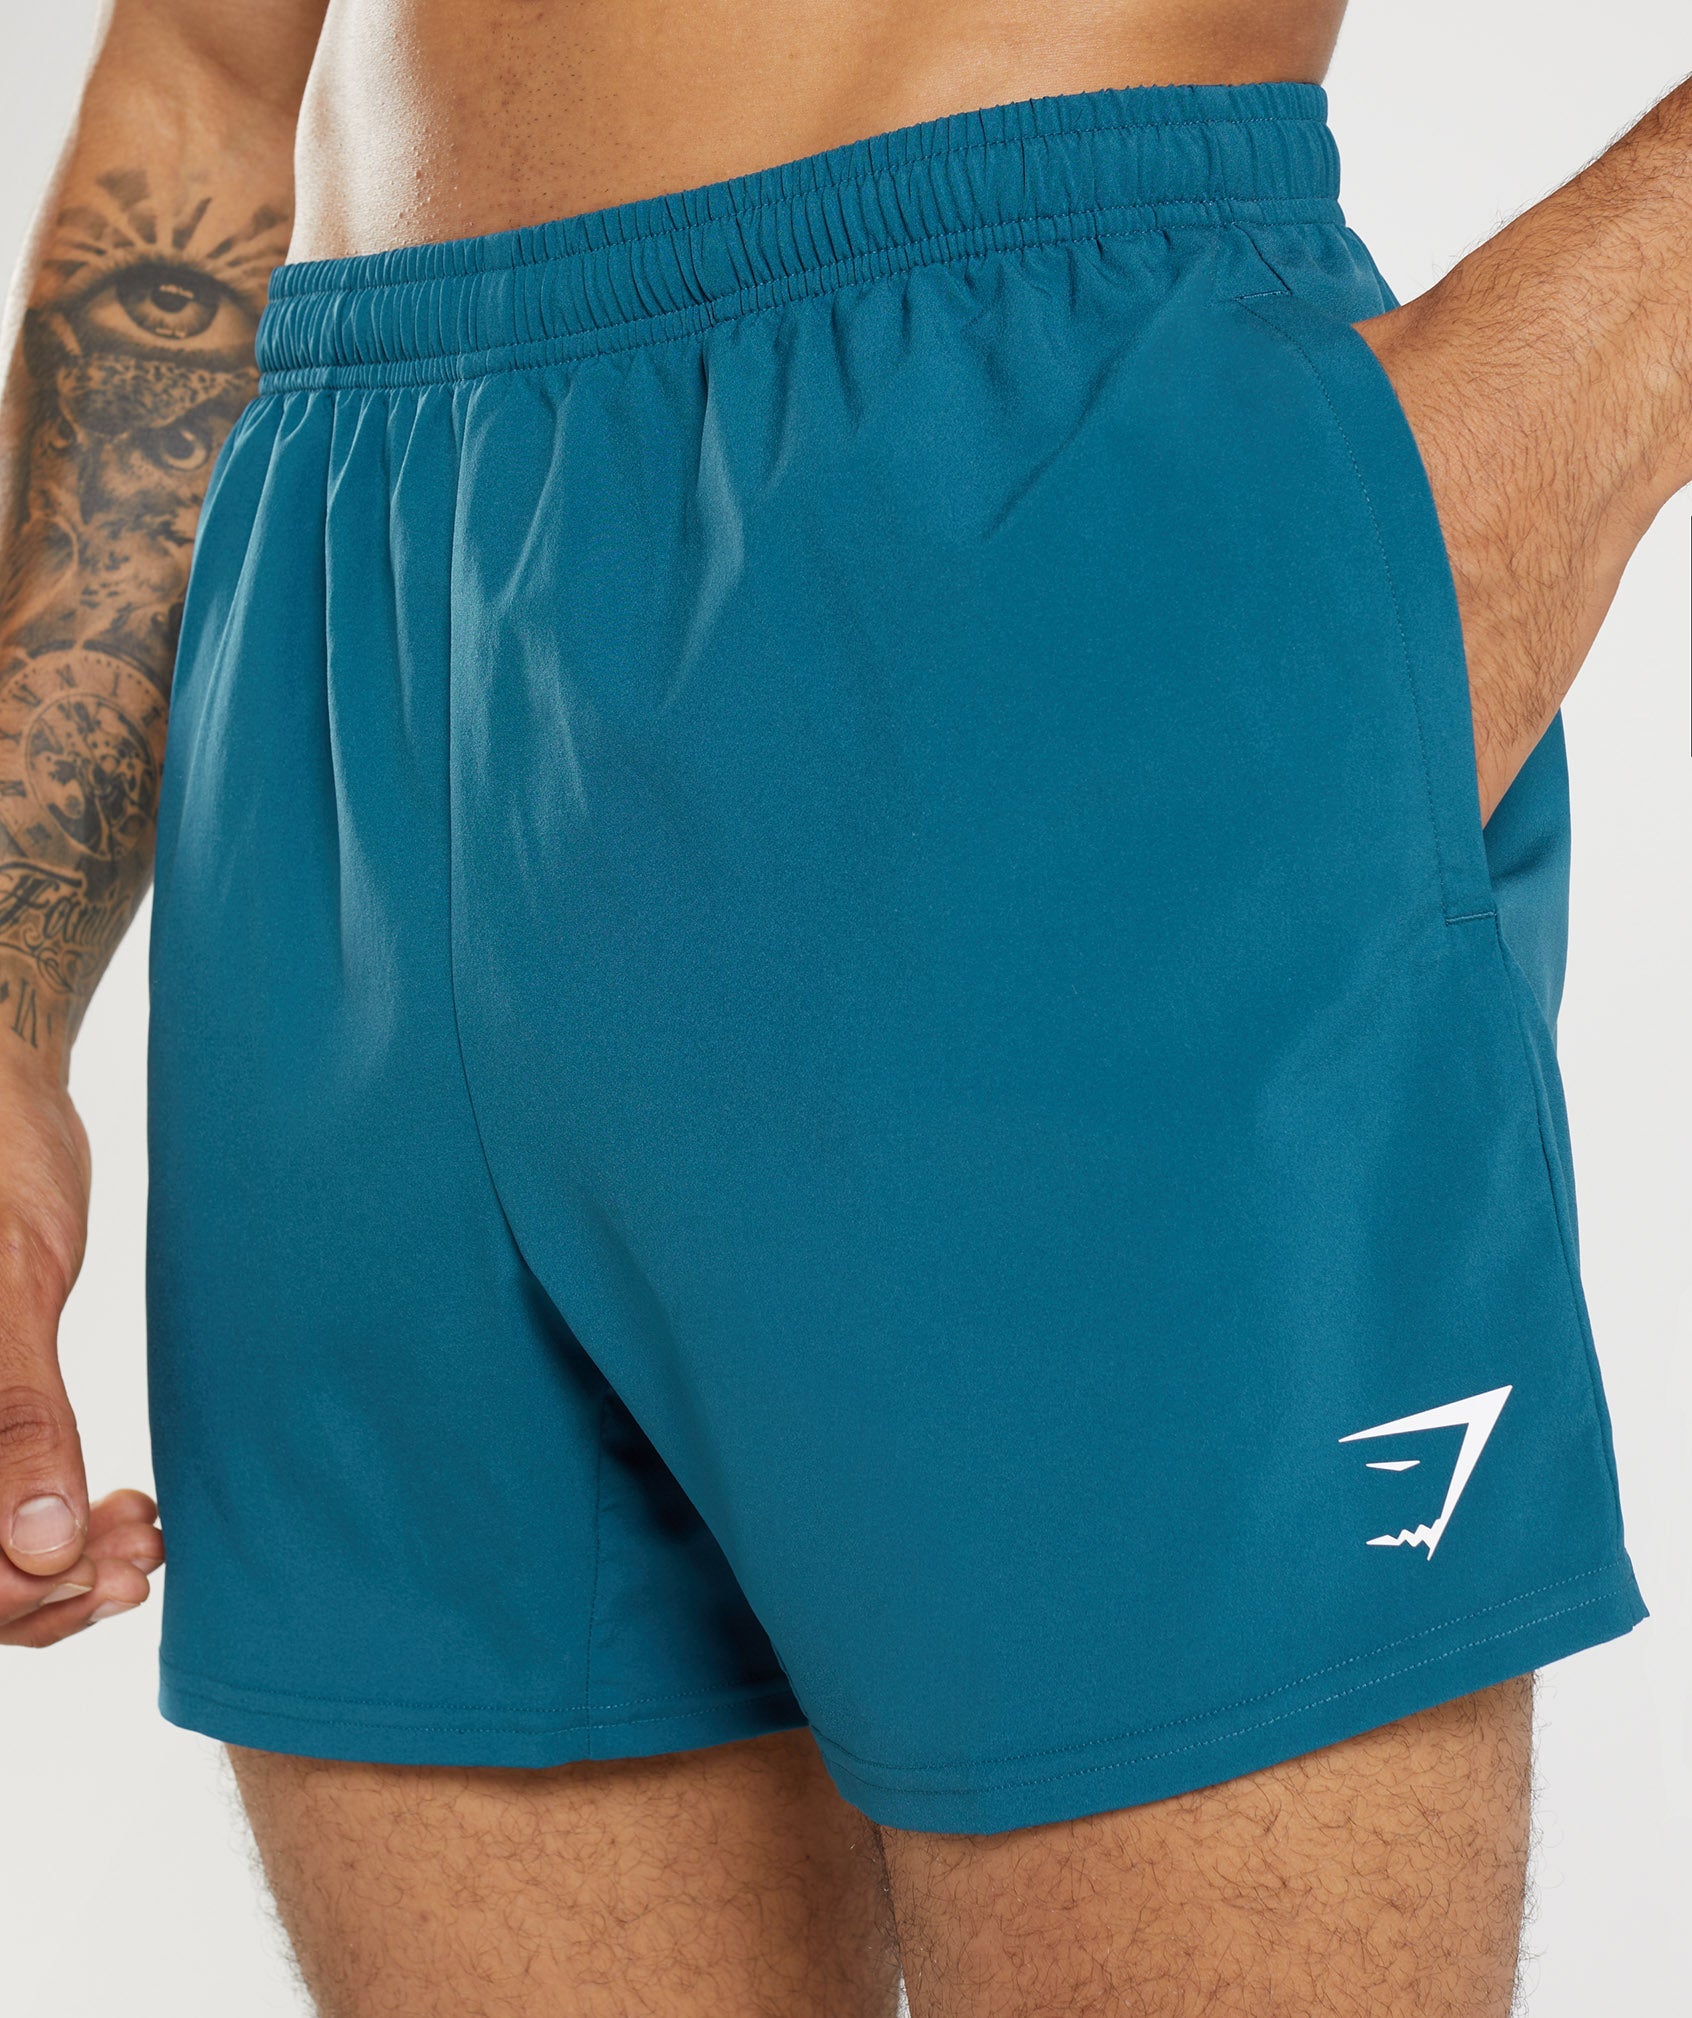 Gymshark Arrival 7 Shorts - Seafoam Blue